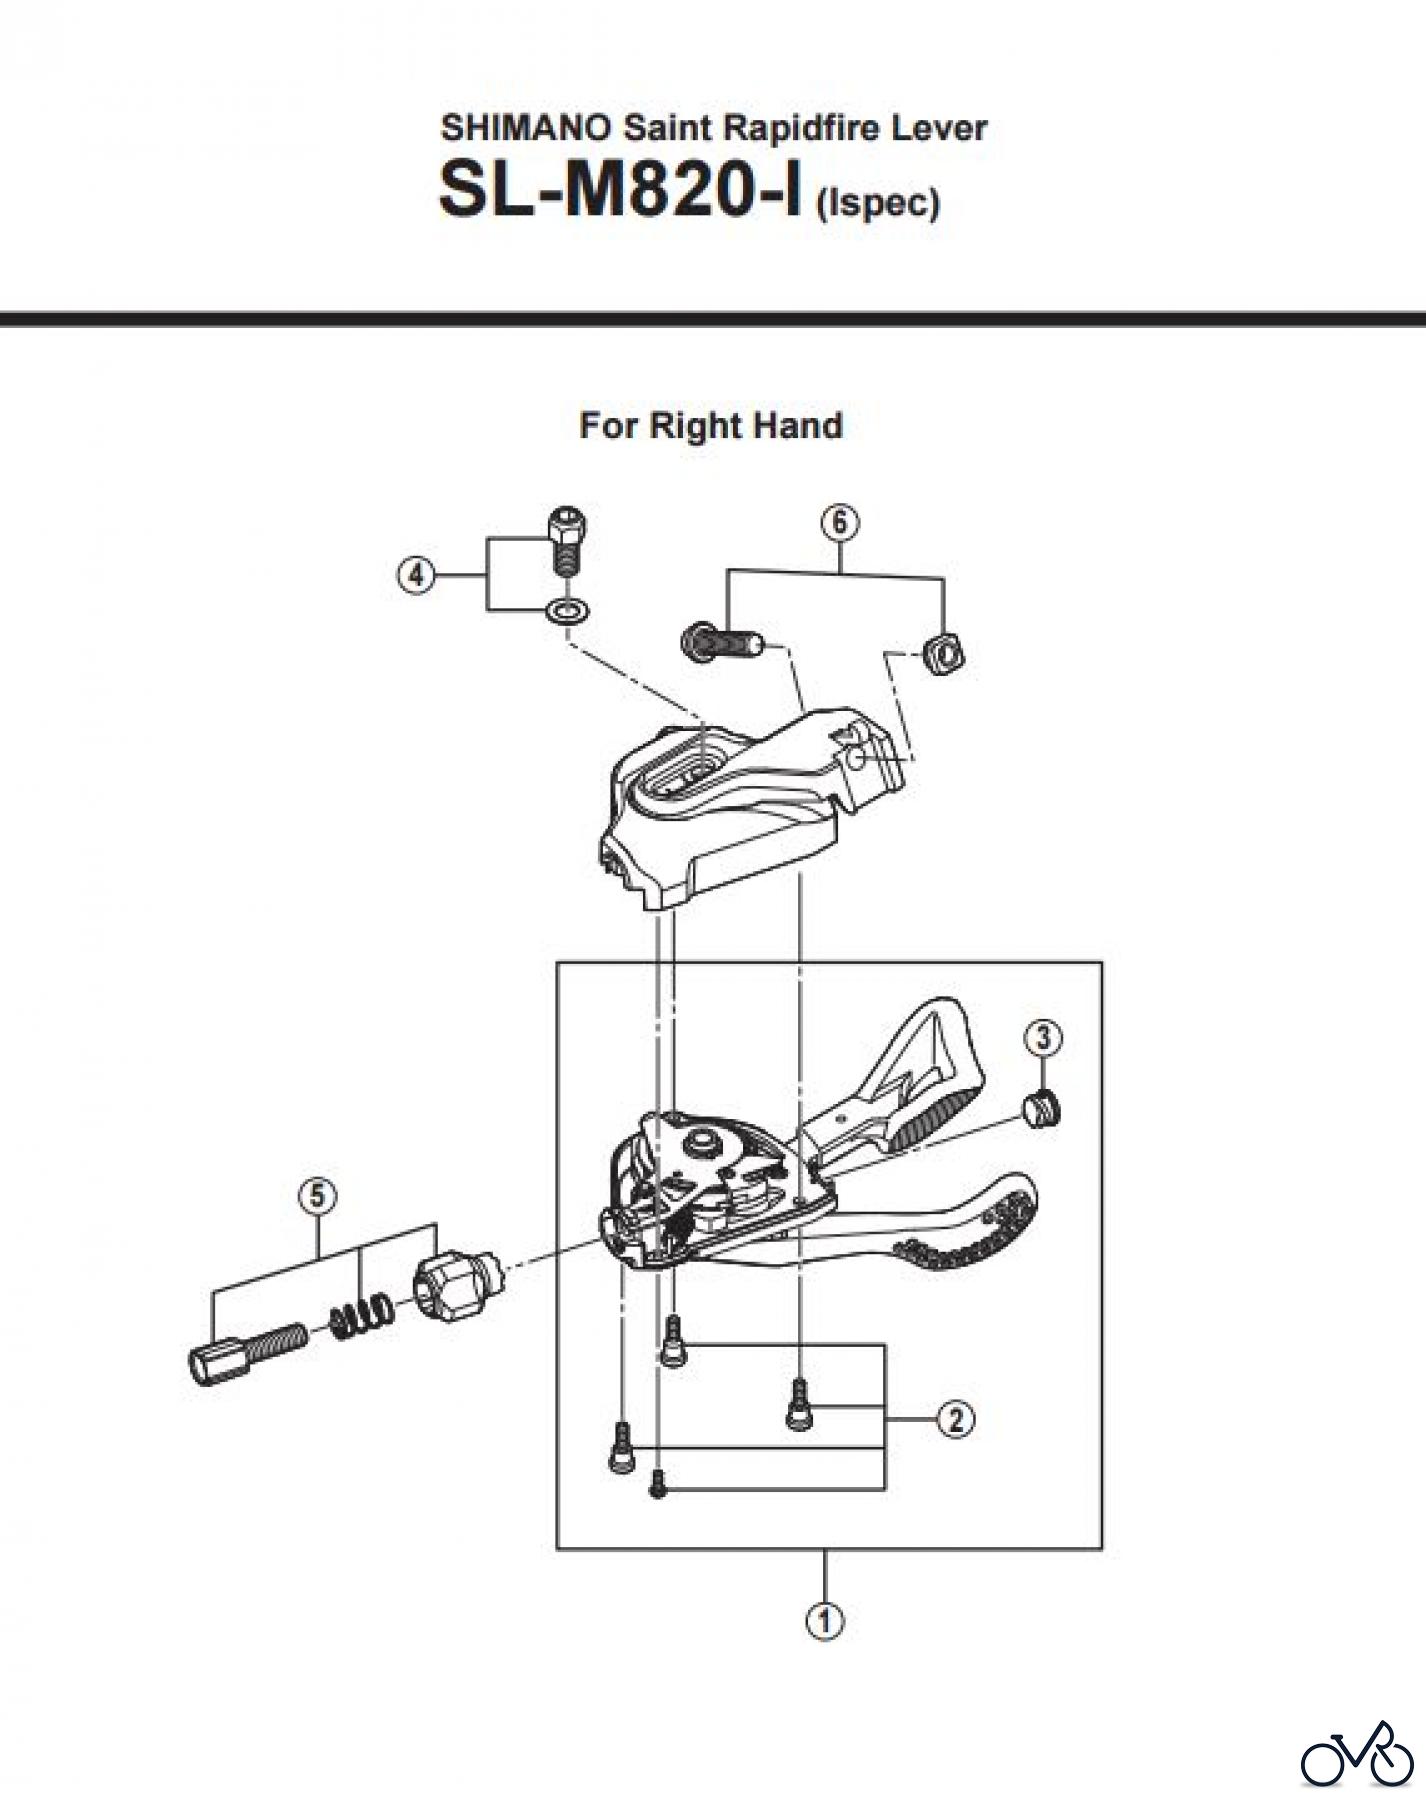  Shimano SL Shift Lever - Schalthebel SL-M820-I -3392 SHIMANO Saint Rapidfire Lever